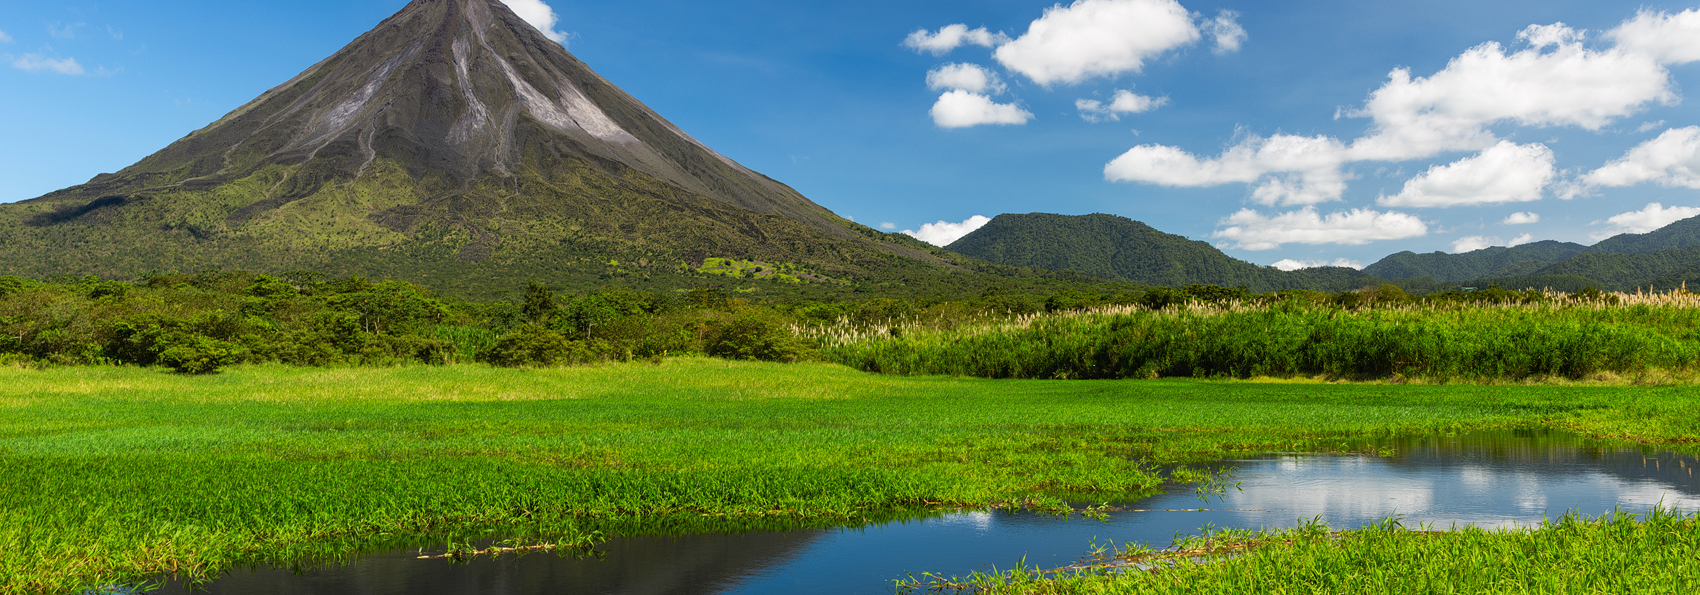 costa rica - la fortuna_arenal volcano national park_vulkan_16